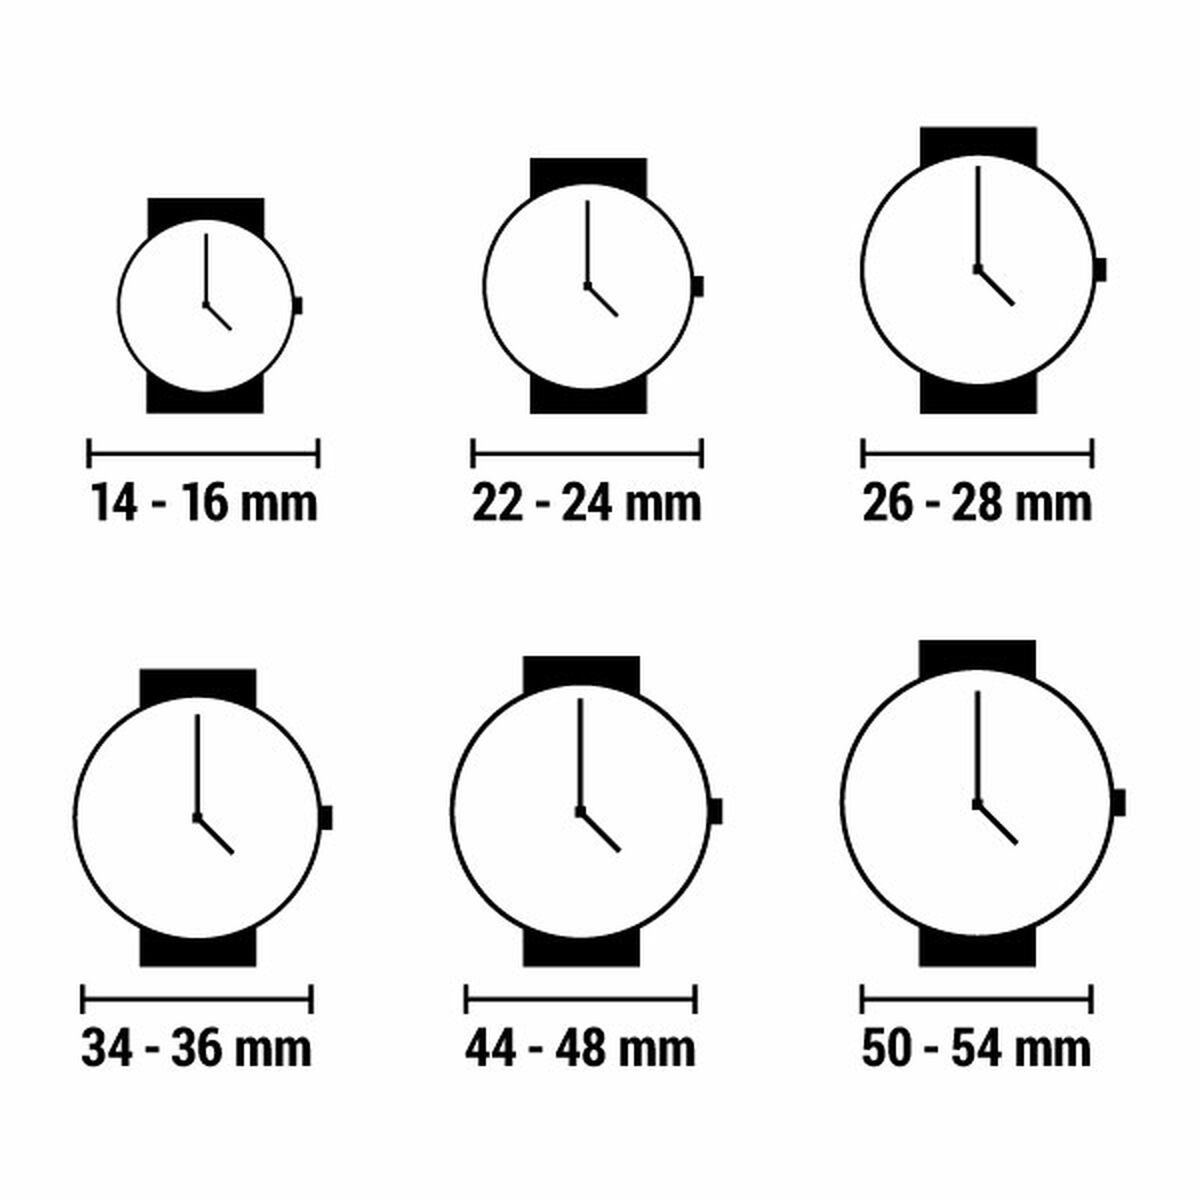 Horloge Dames Ice IC015089 (ø 38 mm)